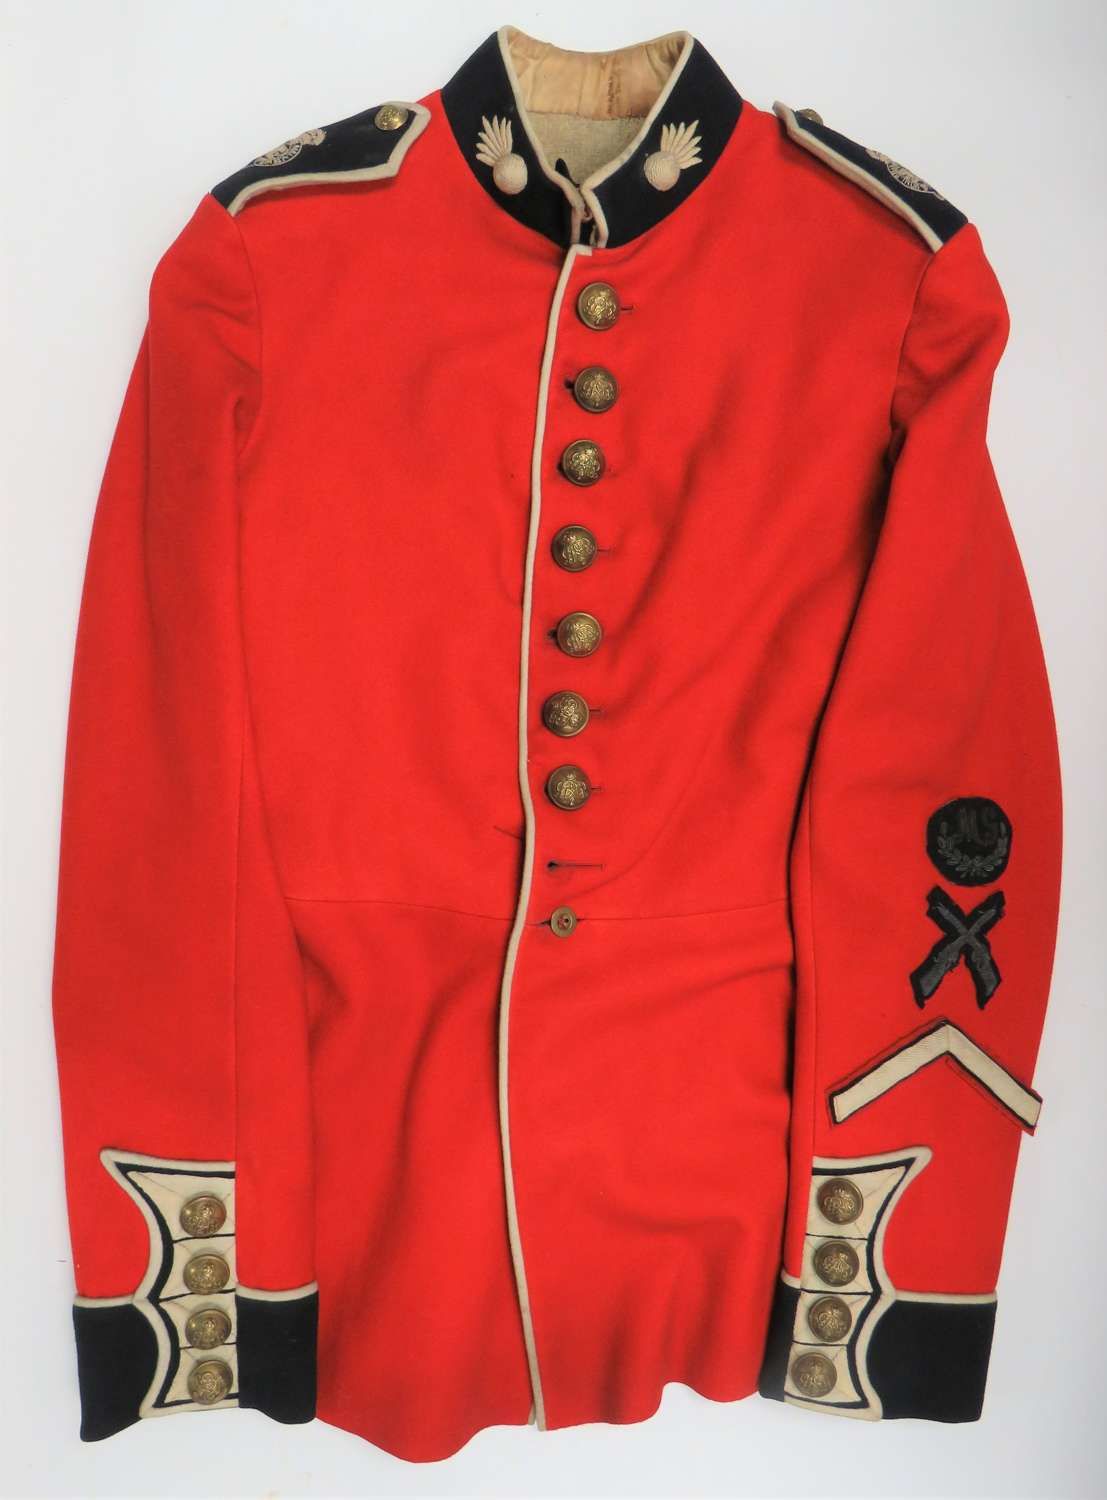 Interwar  Grenadier Guards Full Dress Tunic